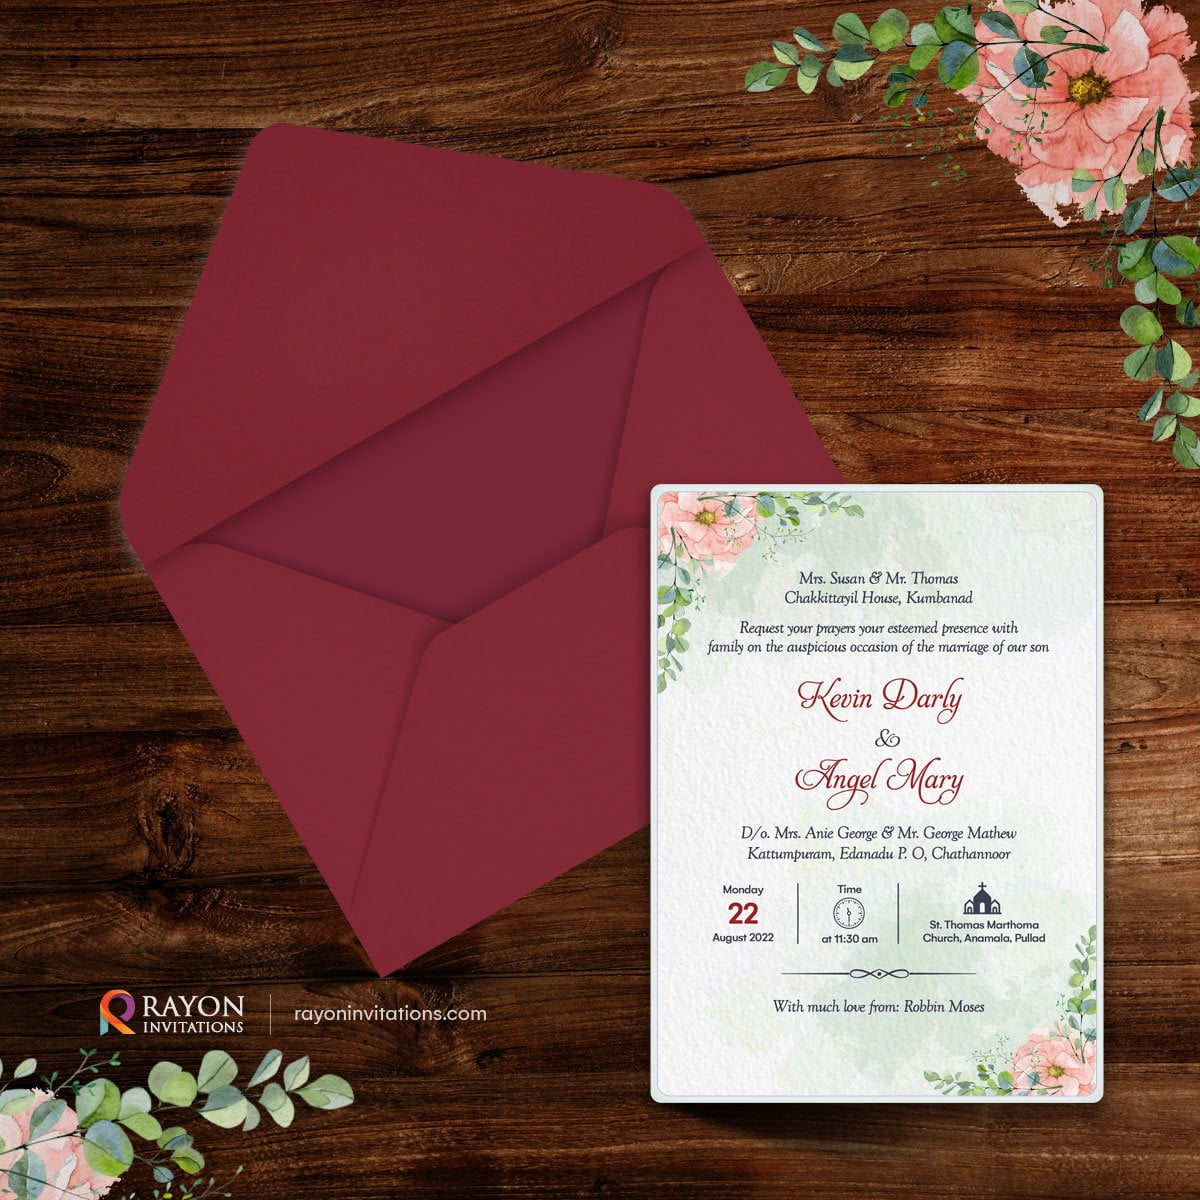 Wedding Invitation Cards in Chennai